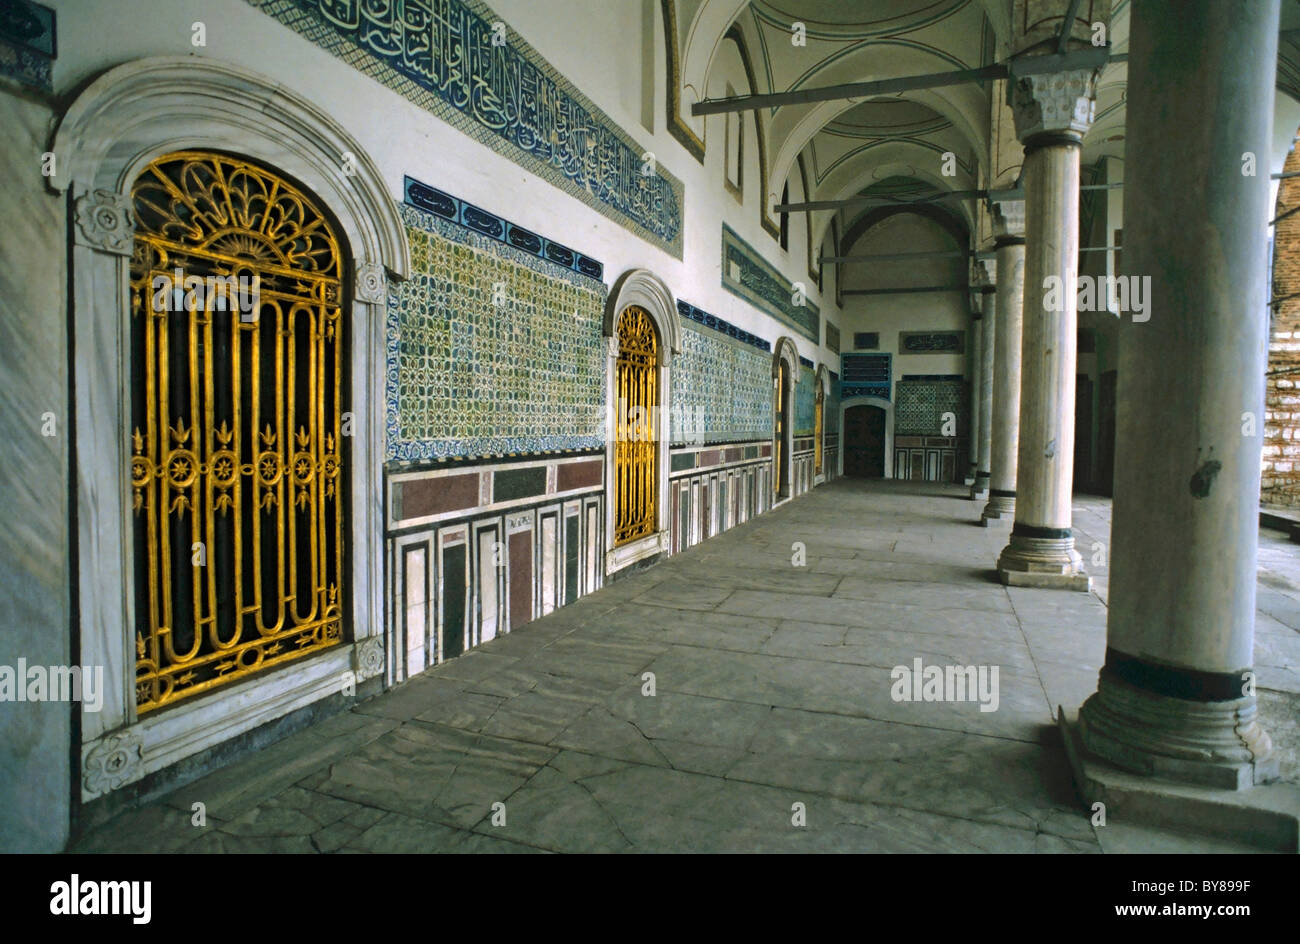 Golden doors and columns along a patio at the Topkapi Palace, Istanbul, Turkey. Stock Photo